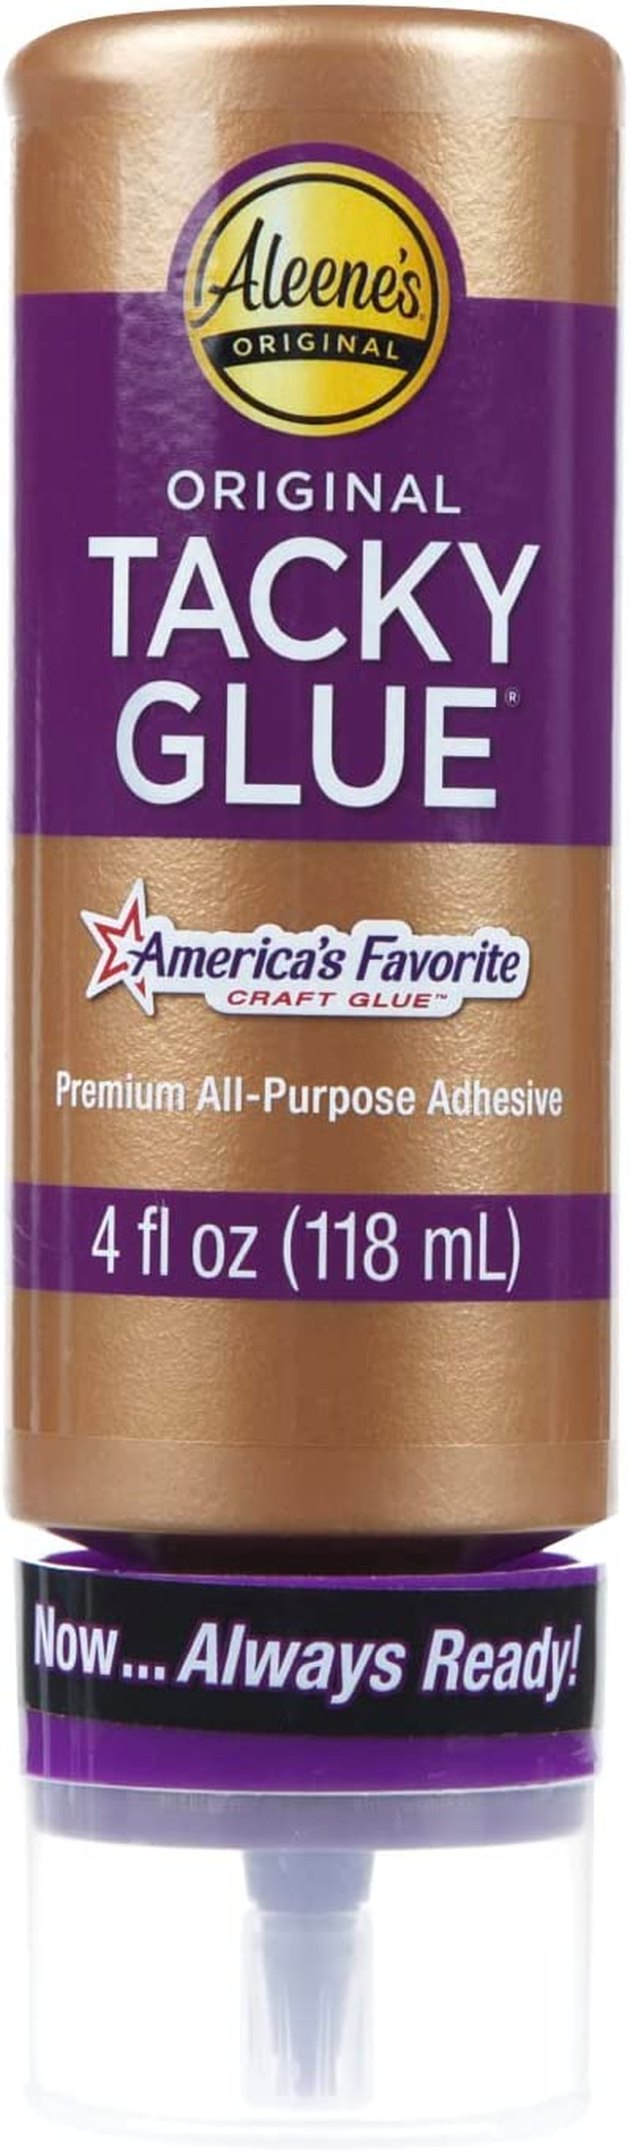 Aleene's 3 Pack, 8 oz Tacky Glue, 8 FL OZ, Original Version 3 Count 8 FL OZ  - 3 Pack Original Tacky Glue